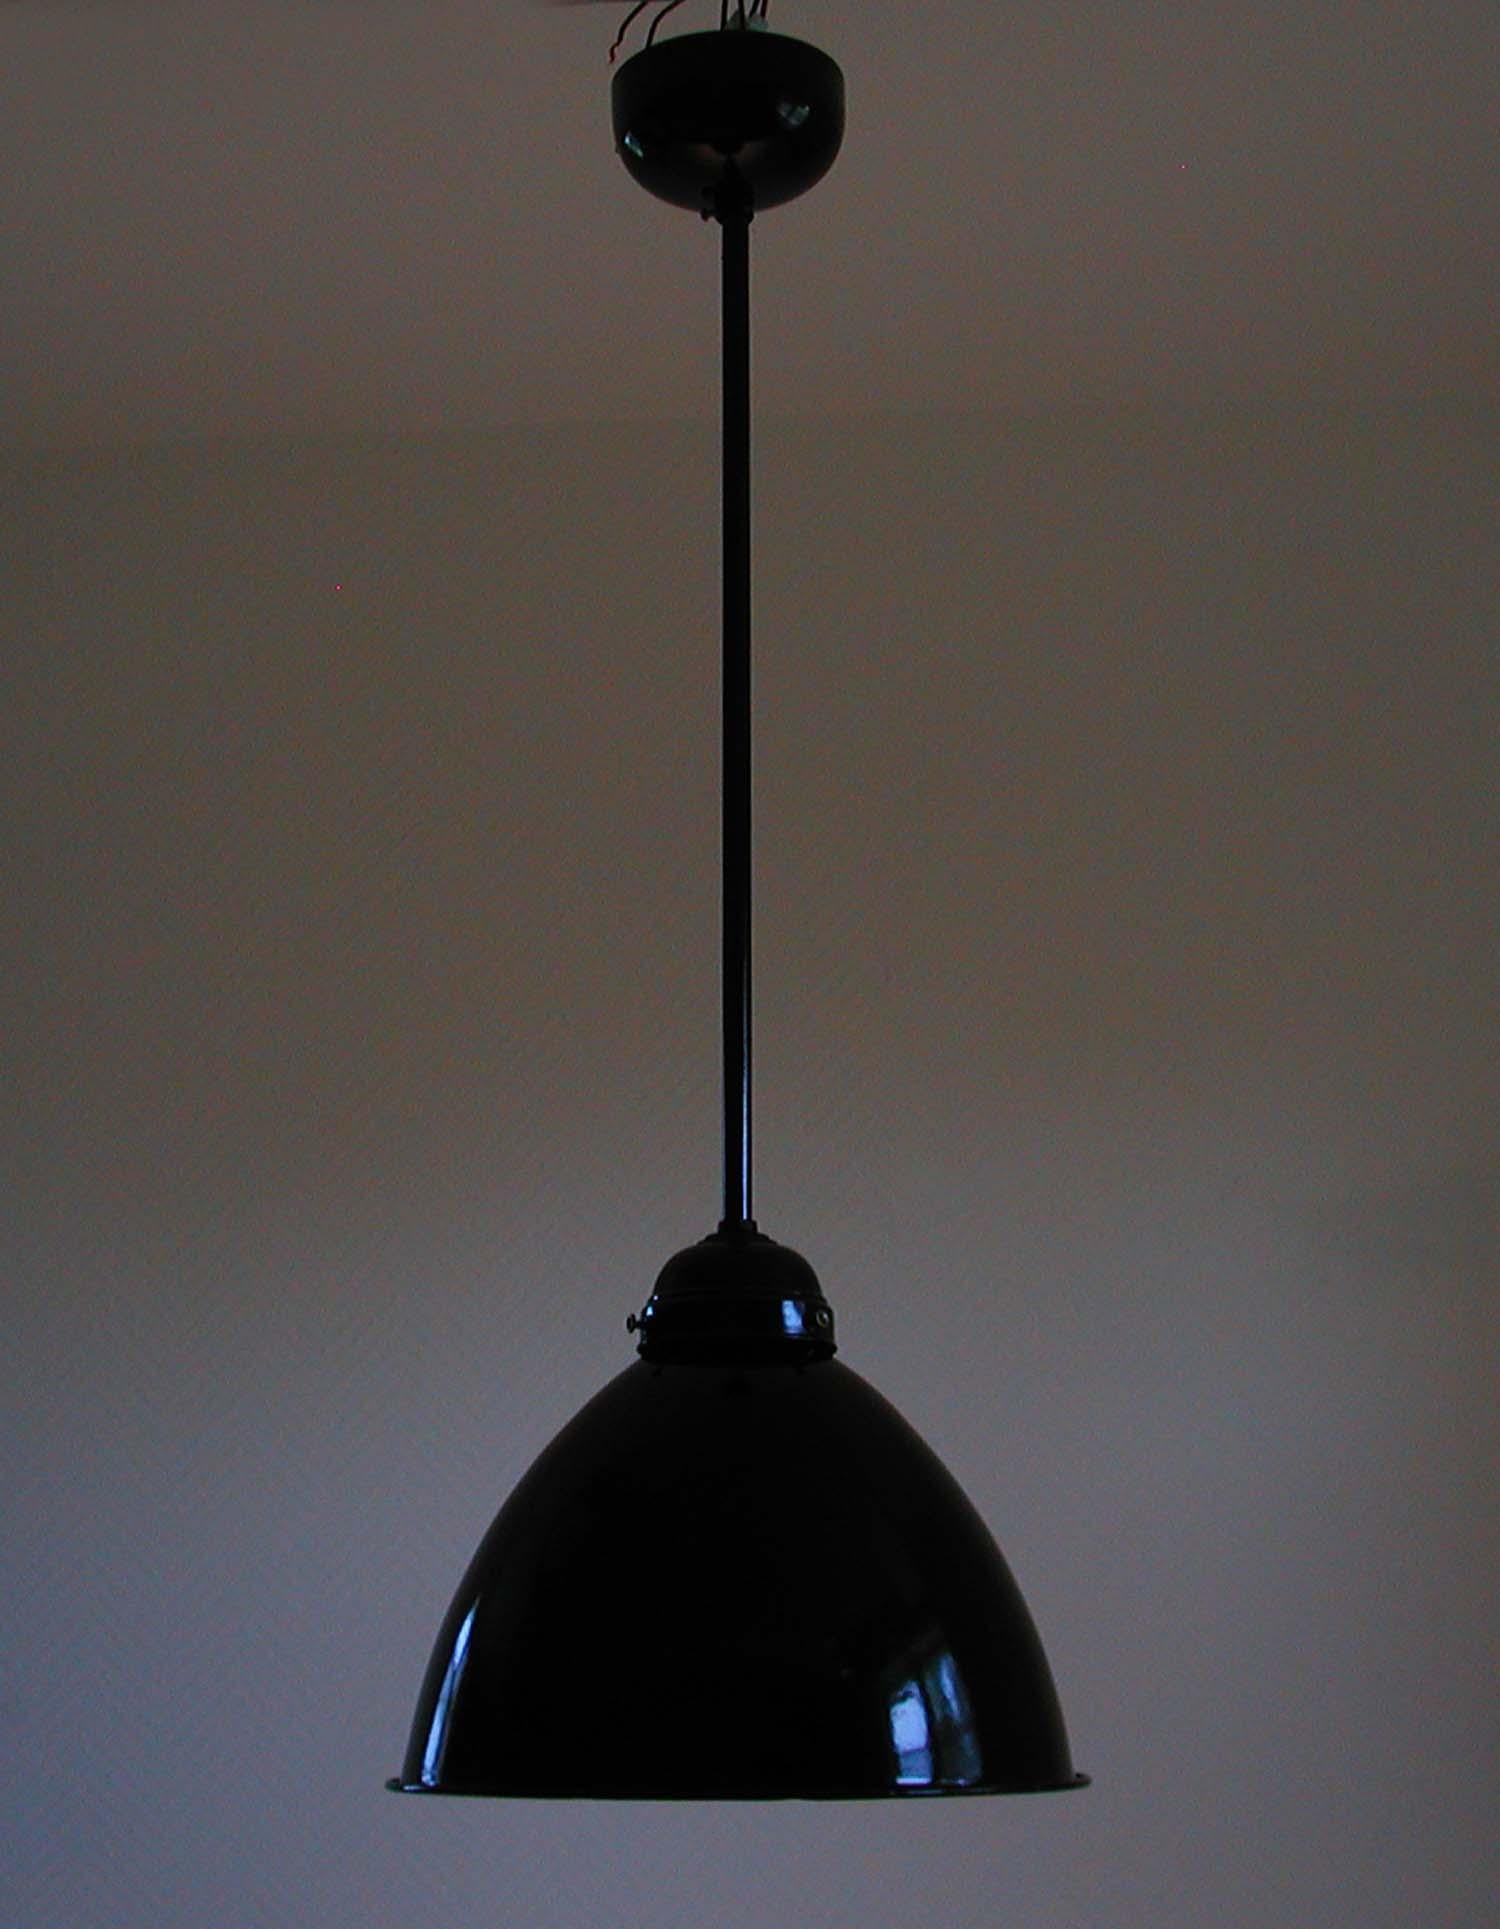 Vintage Midcentury Black German Industrial Enamel Ceiling Light Pendant, 1950s For Sale 4